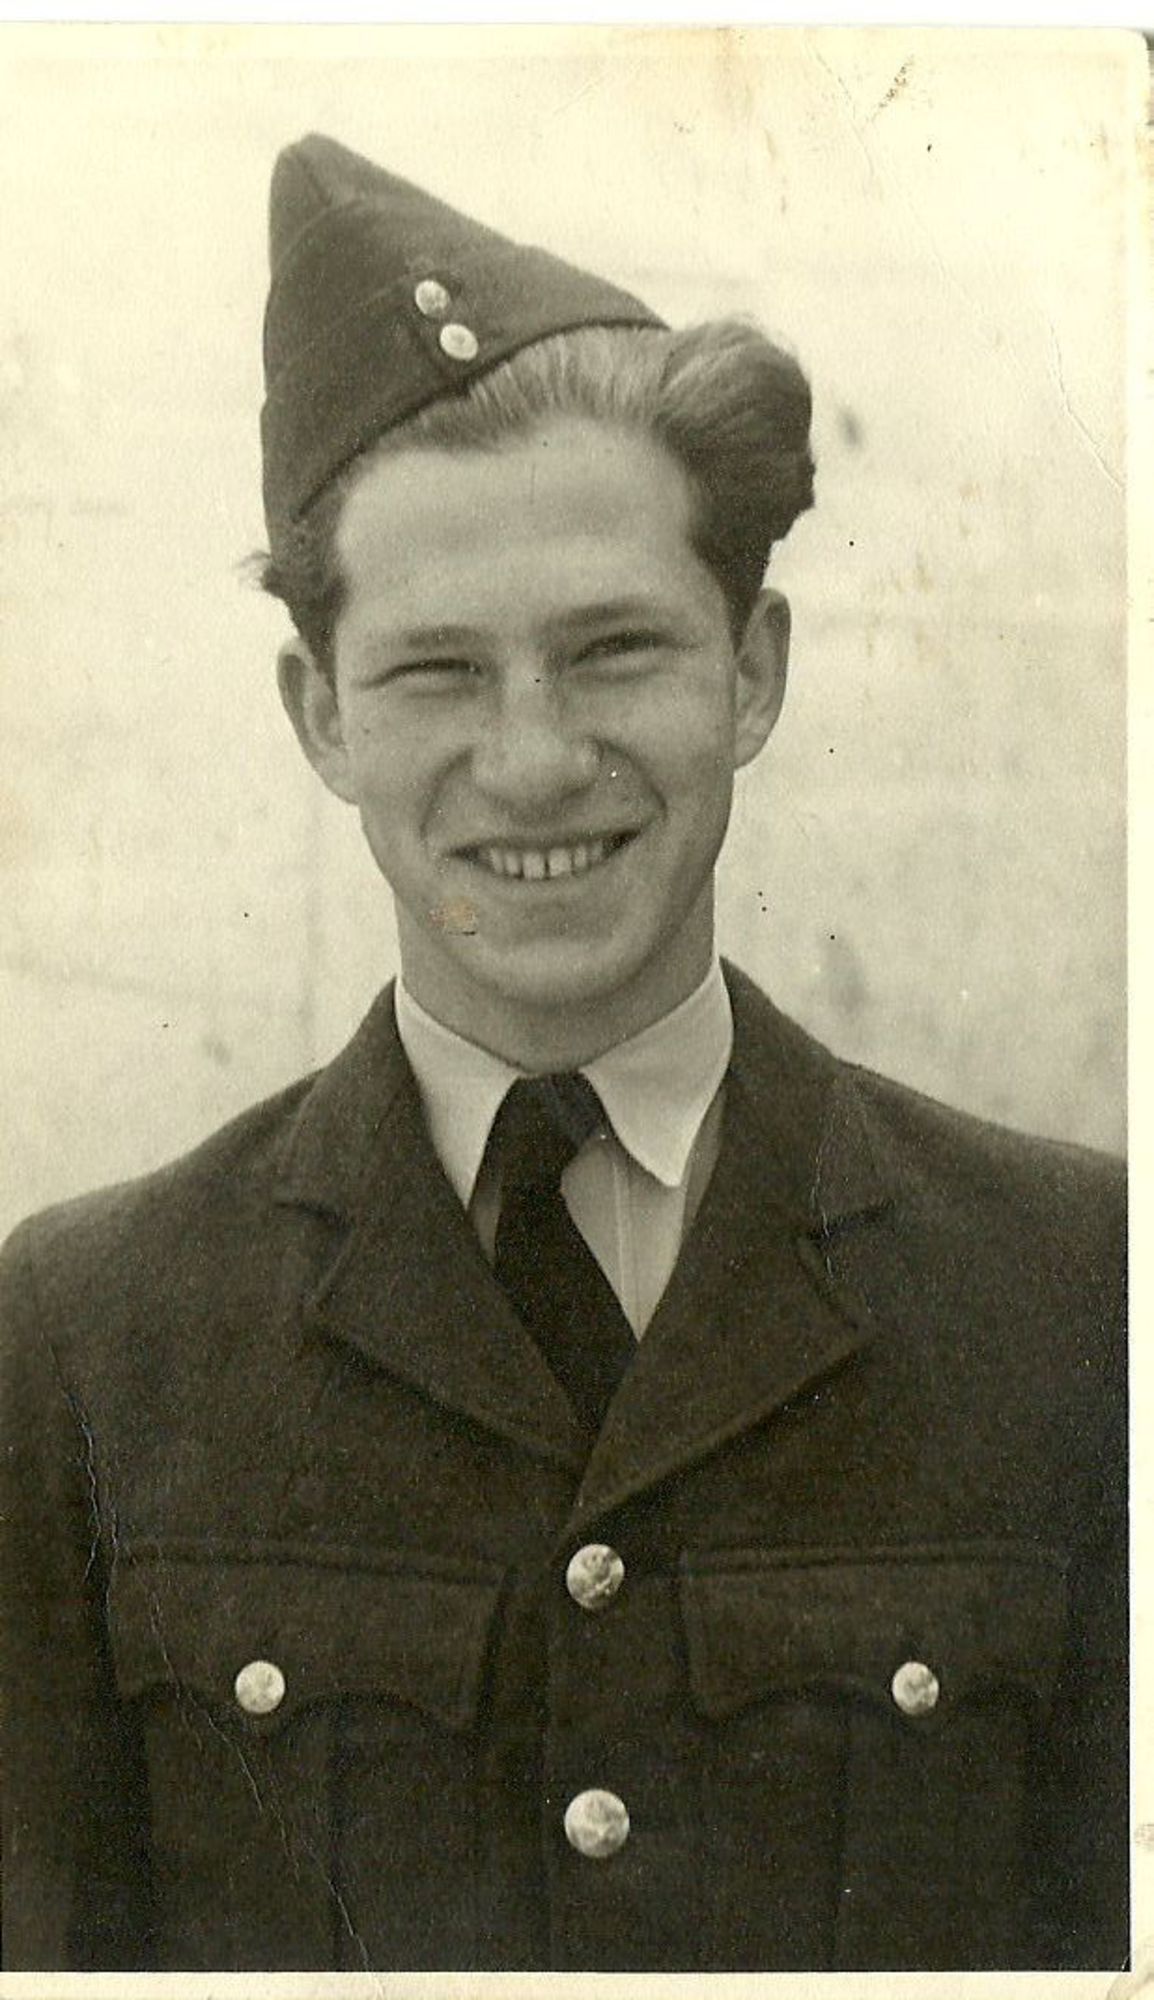 V Royal Air Force, 1944